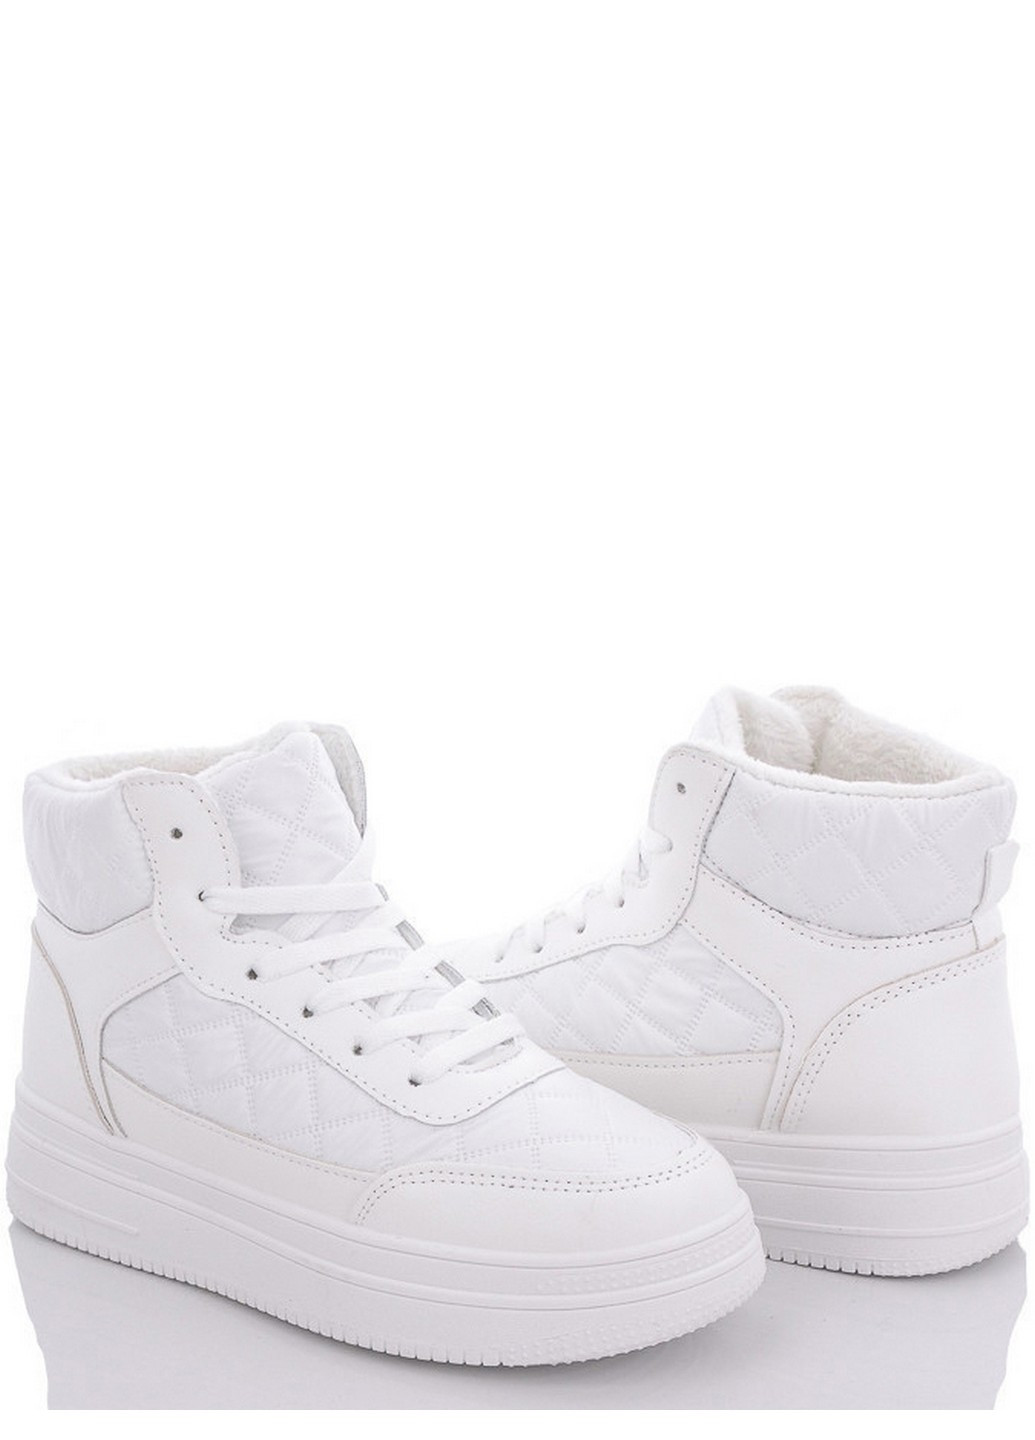 Белые кэжуал зимние зимние ботинки mbb05-2 Stilli